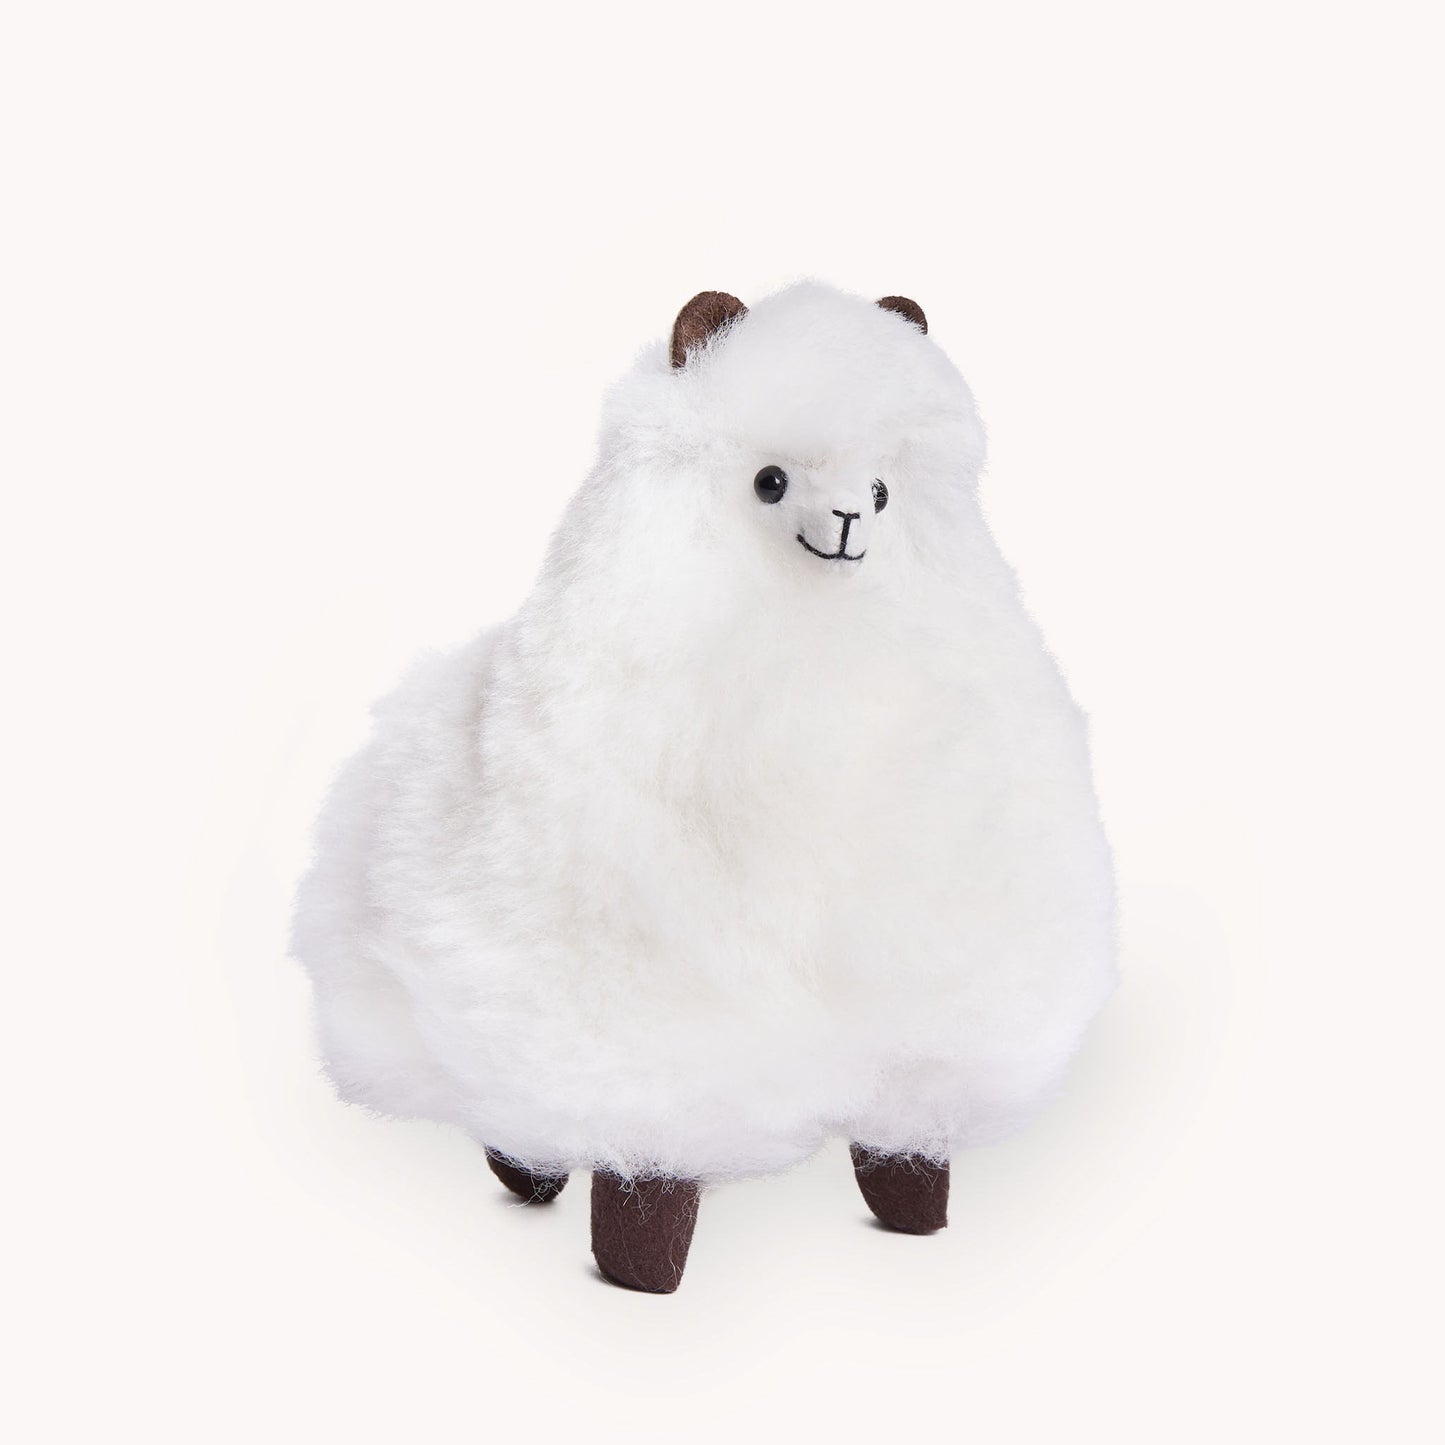 Alpaca Wool Stuffed Animals - 5.5" Alpaca